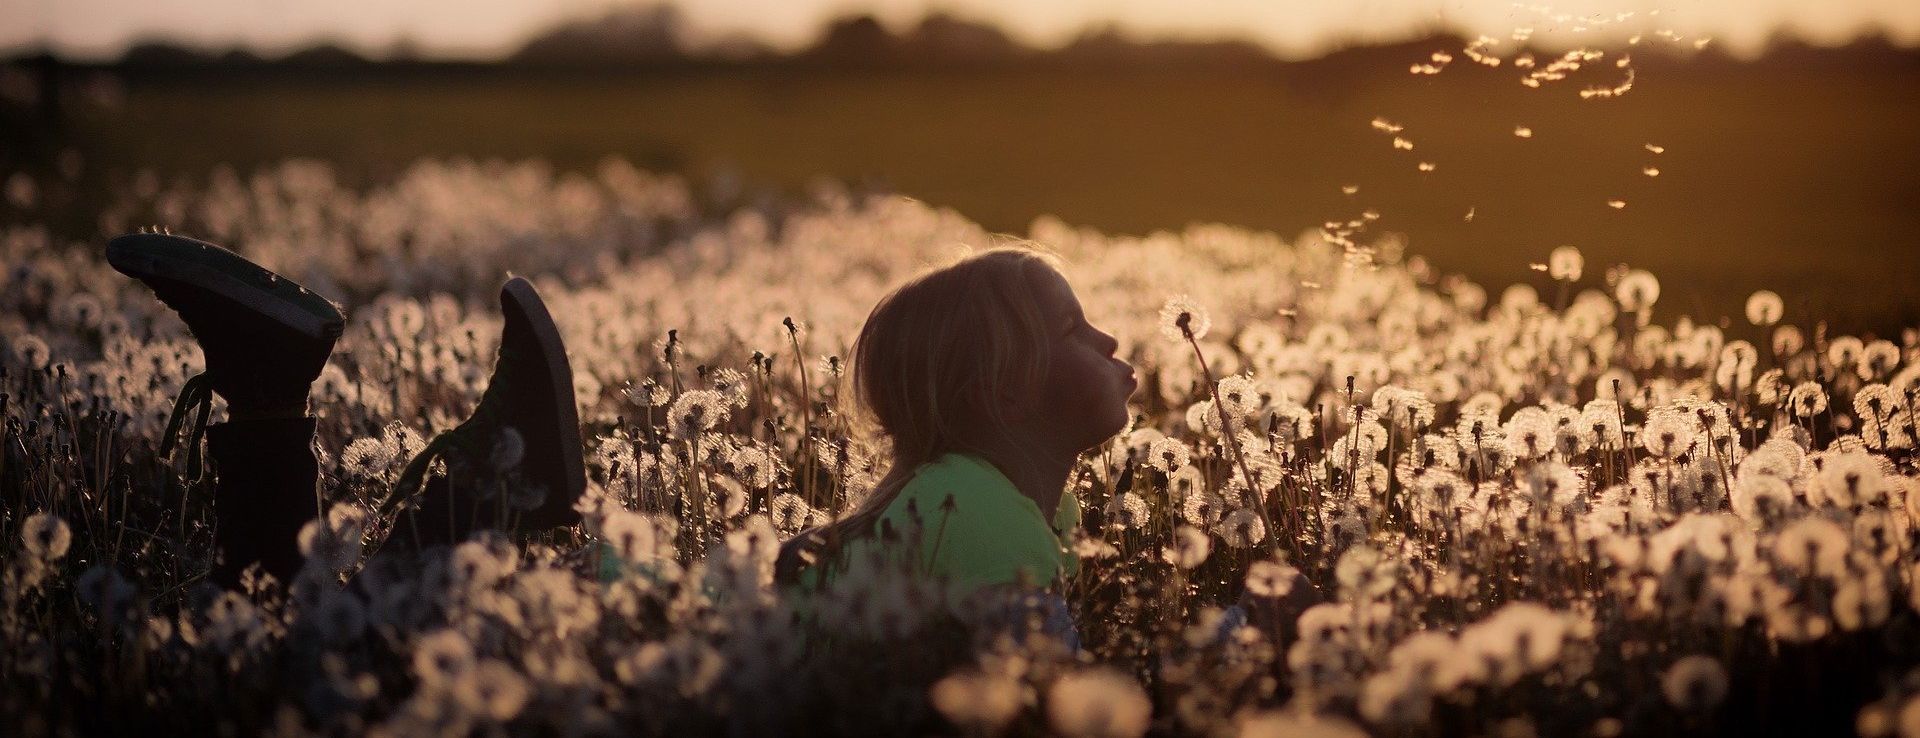 Kind in einem Pusteblumen Feld bei Sonnenuntergang